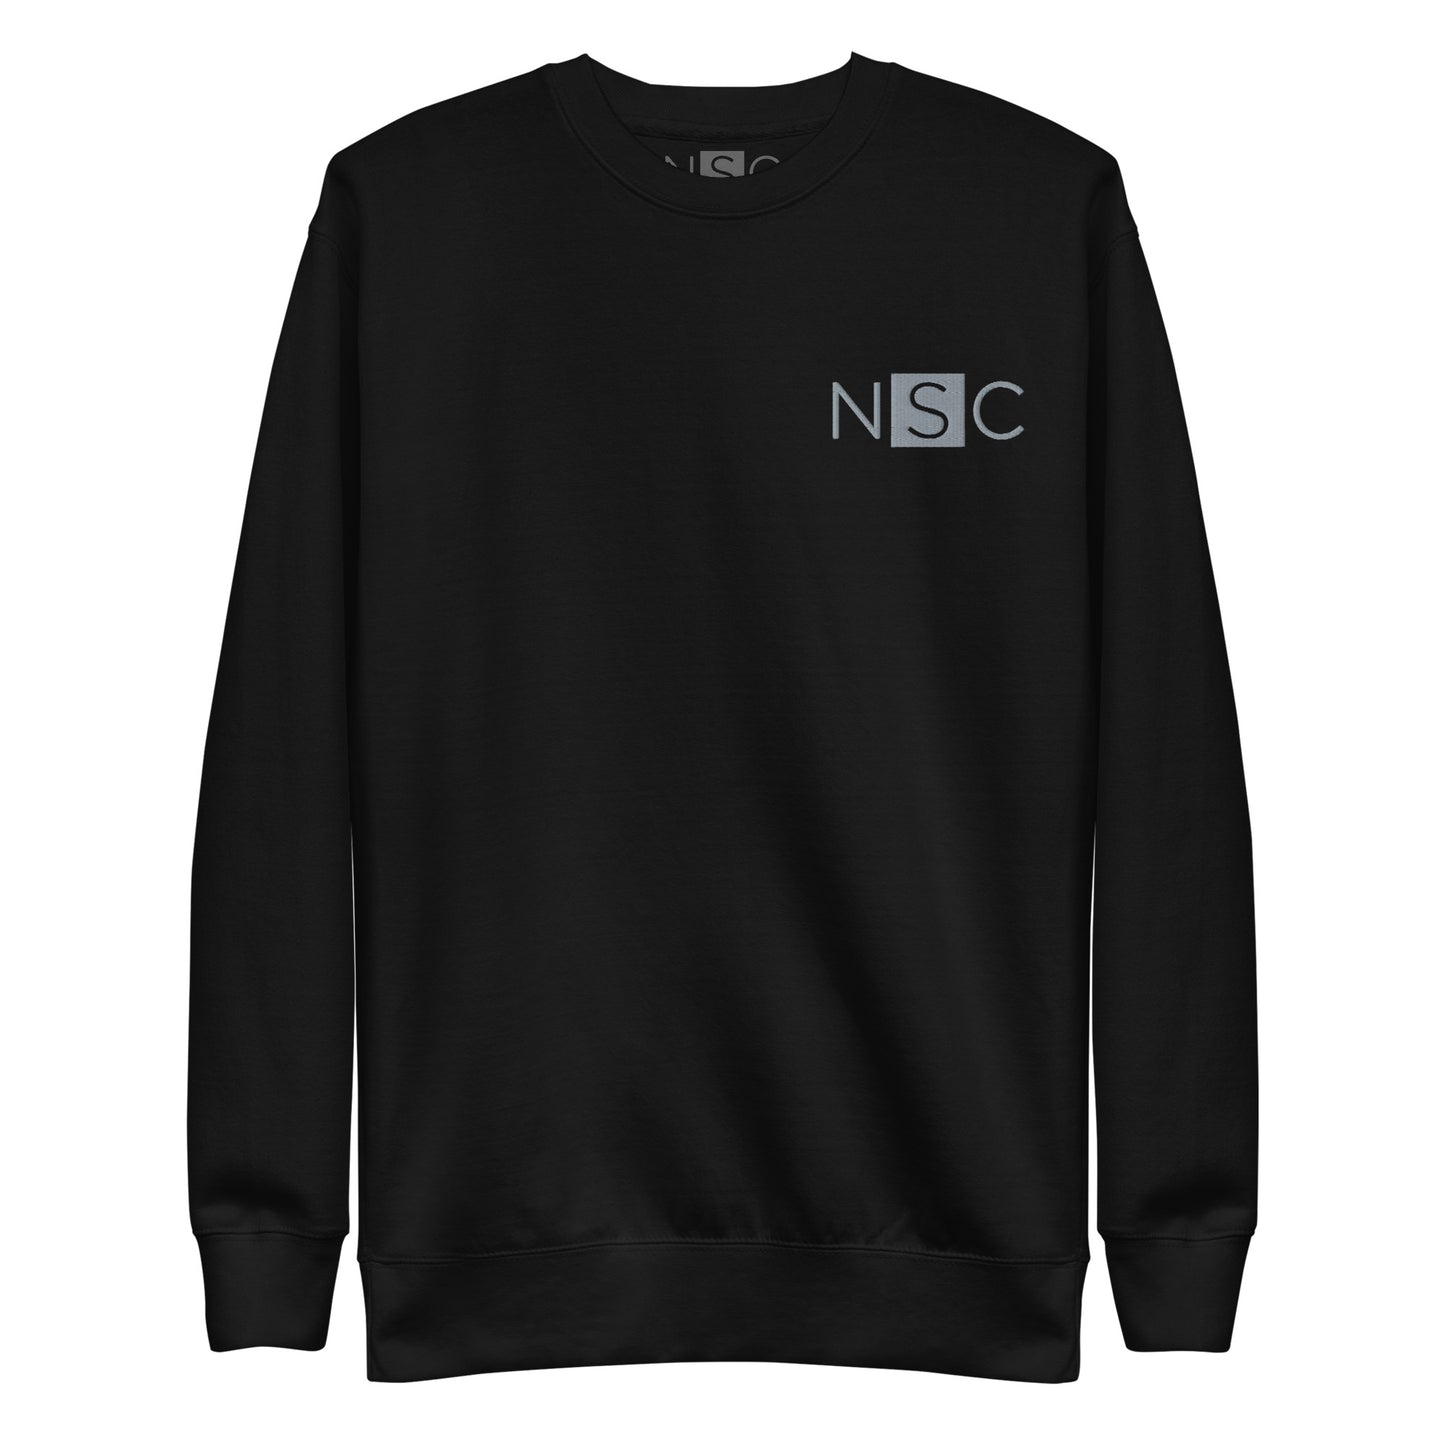 Nashville Sampling Co (NSC) Embroidered Unisex Premium Sweatshirt